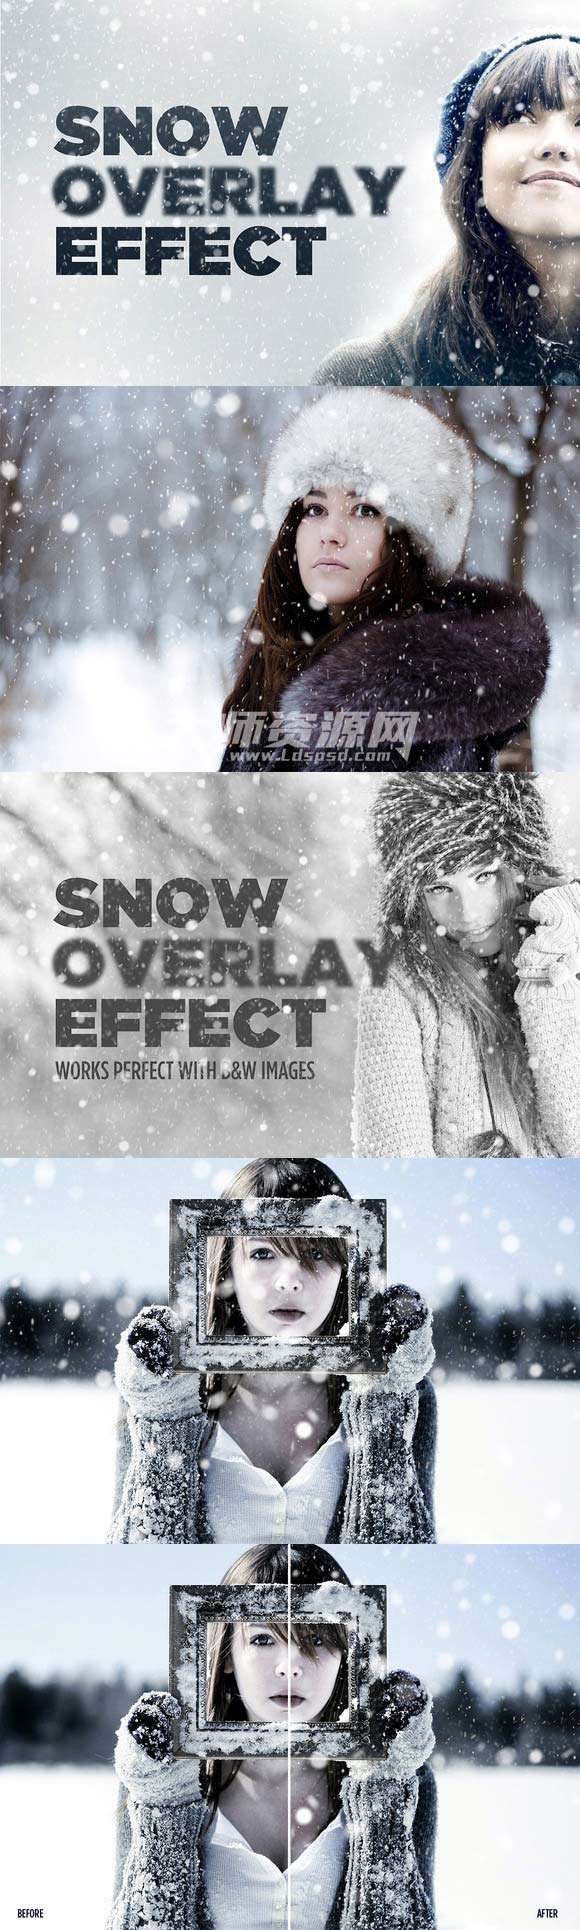 Snowy Day Overlay Effect,相片叠加浪漫雪景模板